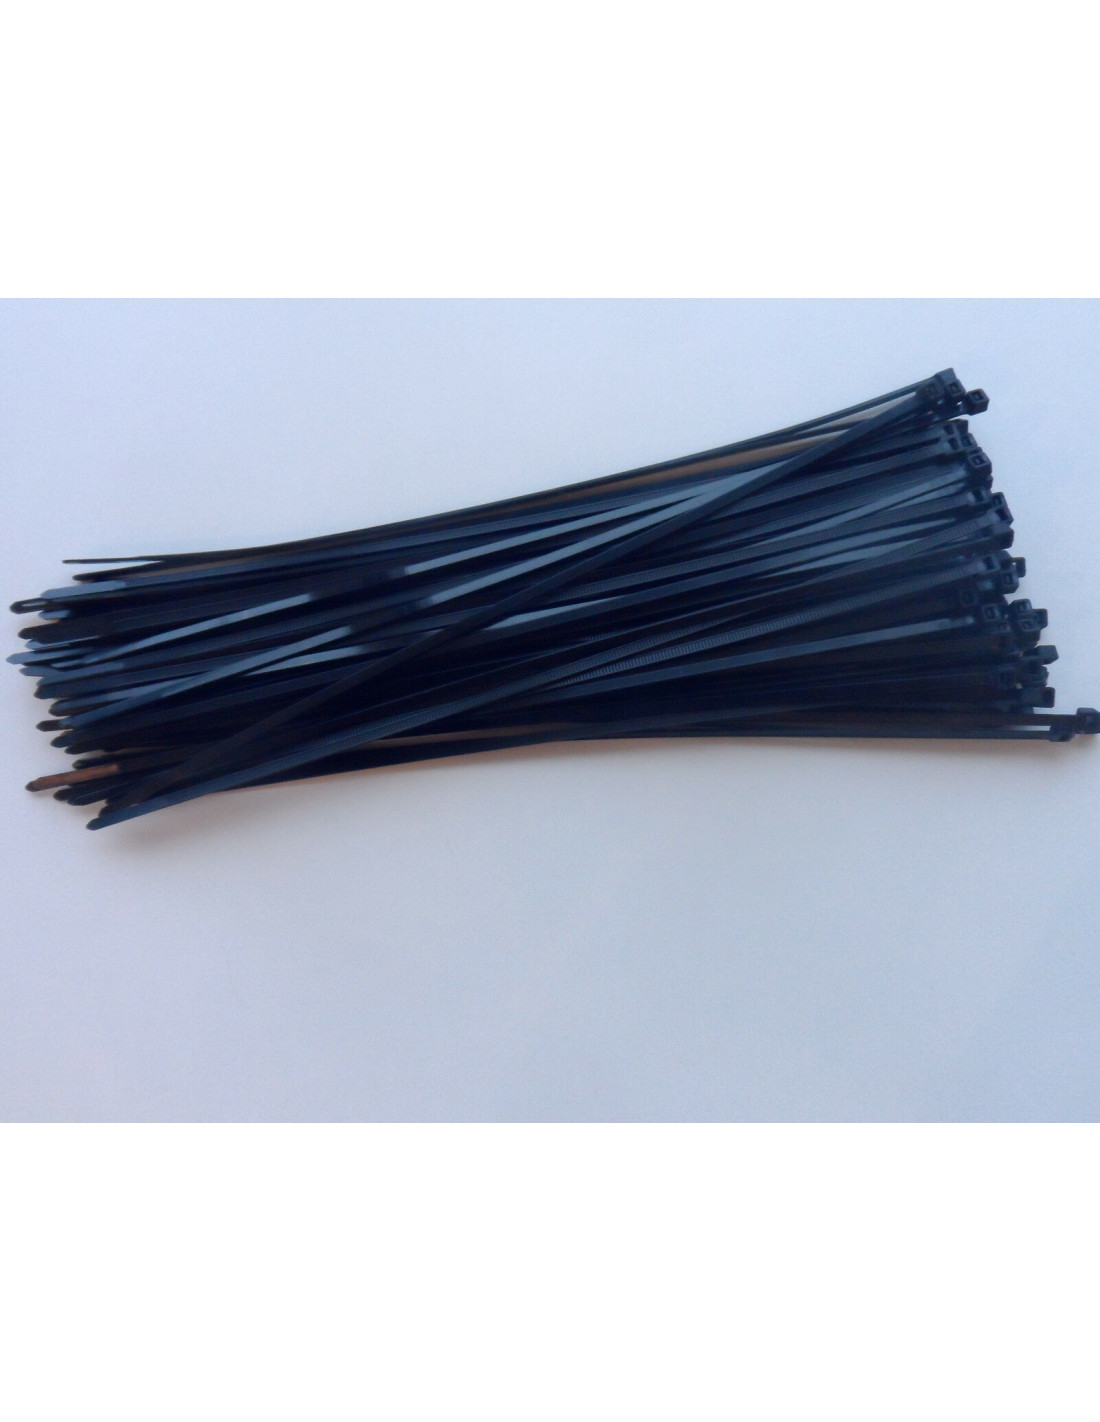 Collier nylon rislan 7,8x240 mm noir sachet de 100